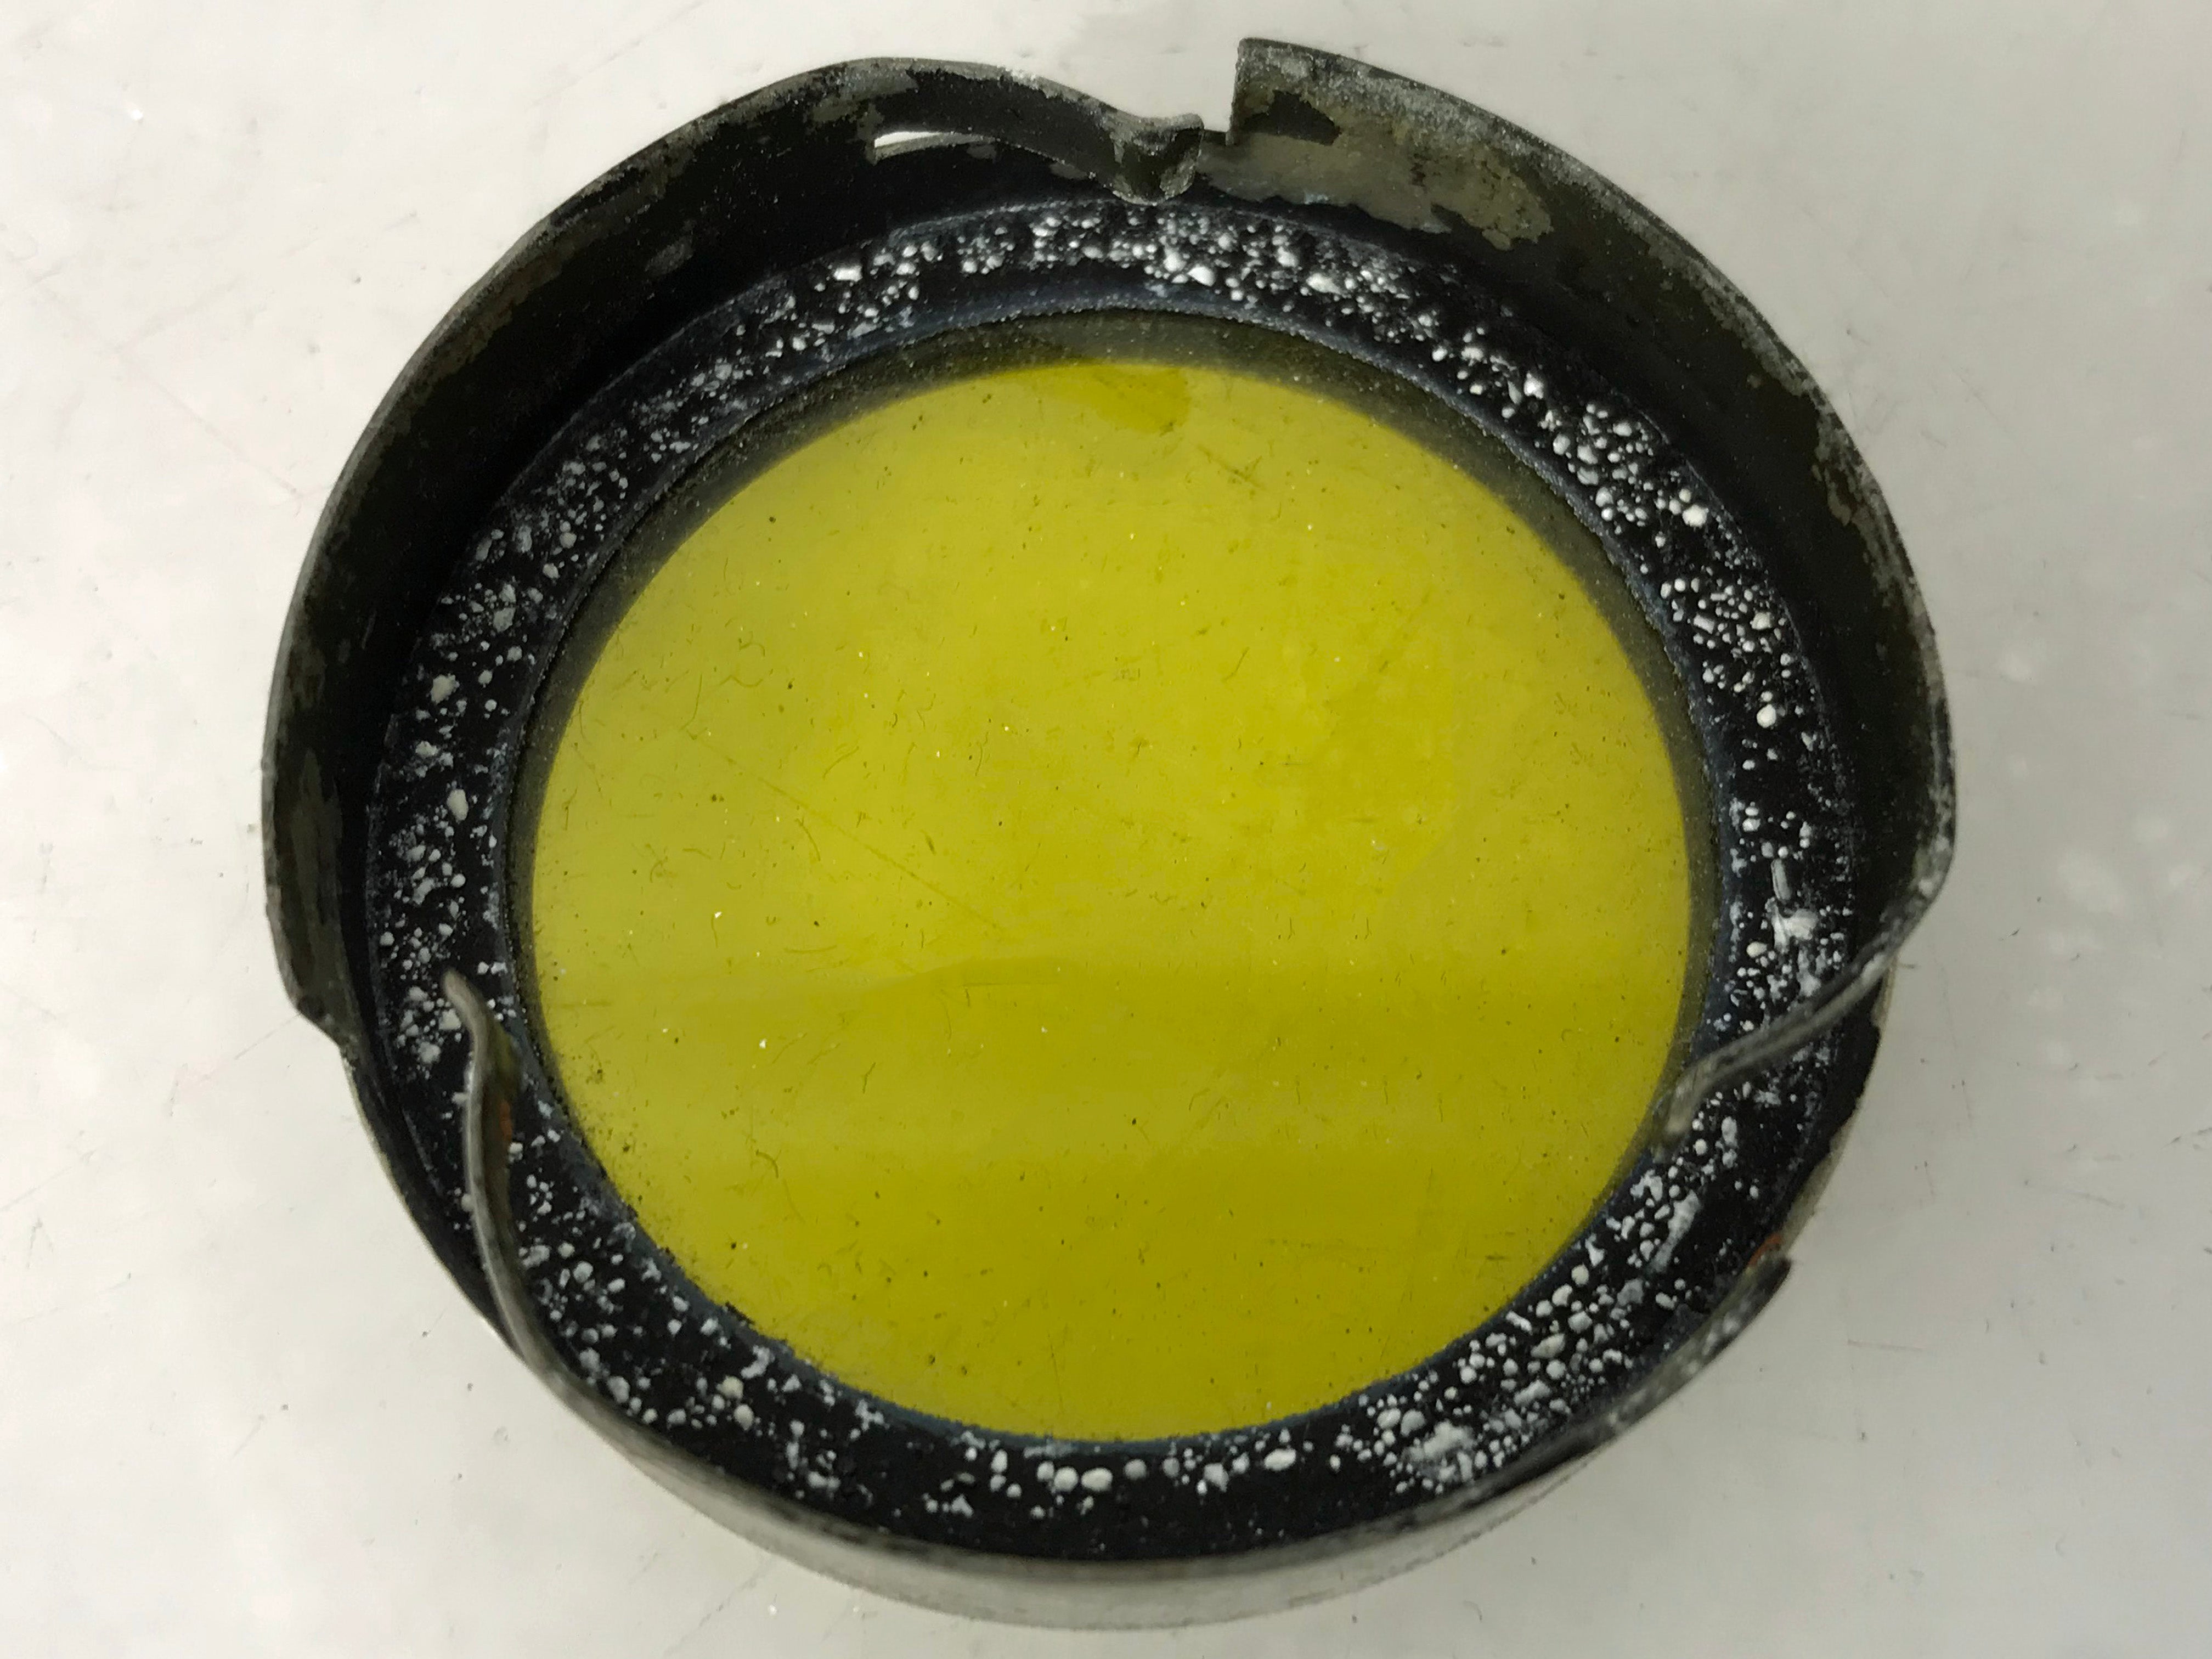 Burke & James Ingento Series B Yellow Color Lens Filter